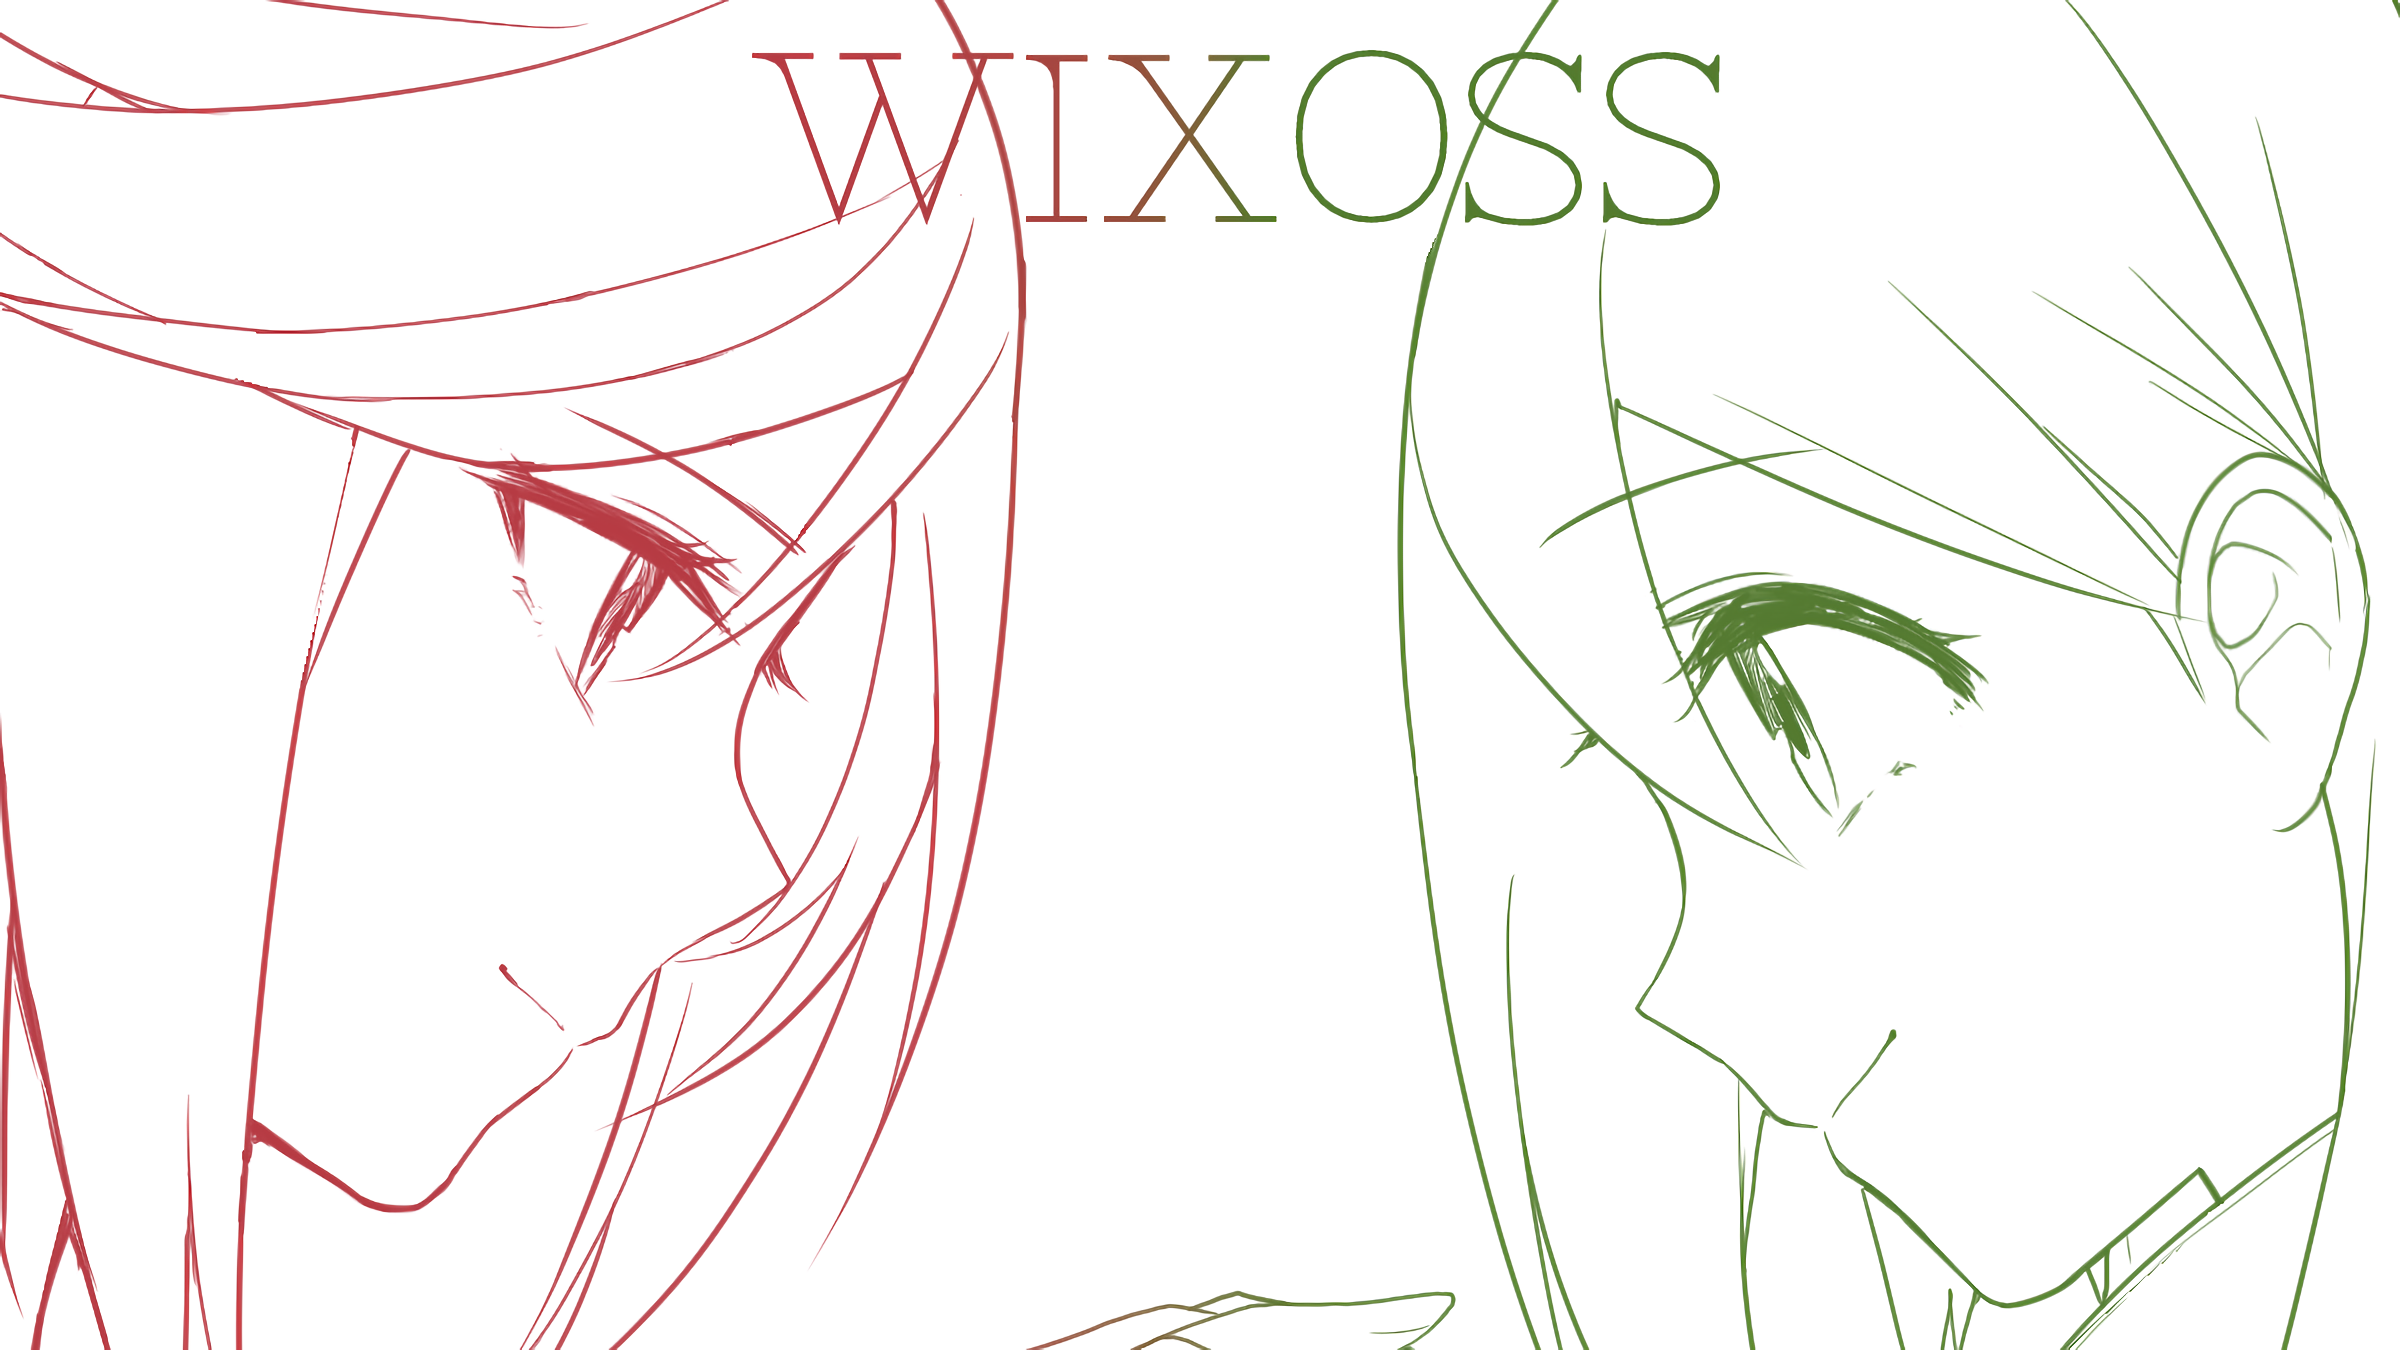 WIXOSS HD Wallpaper